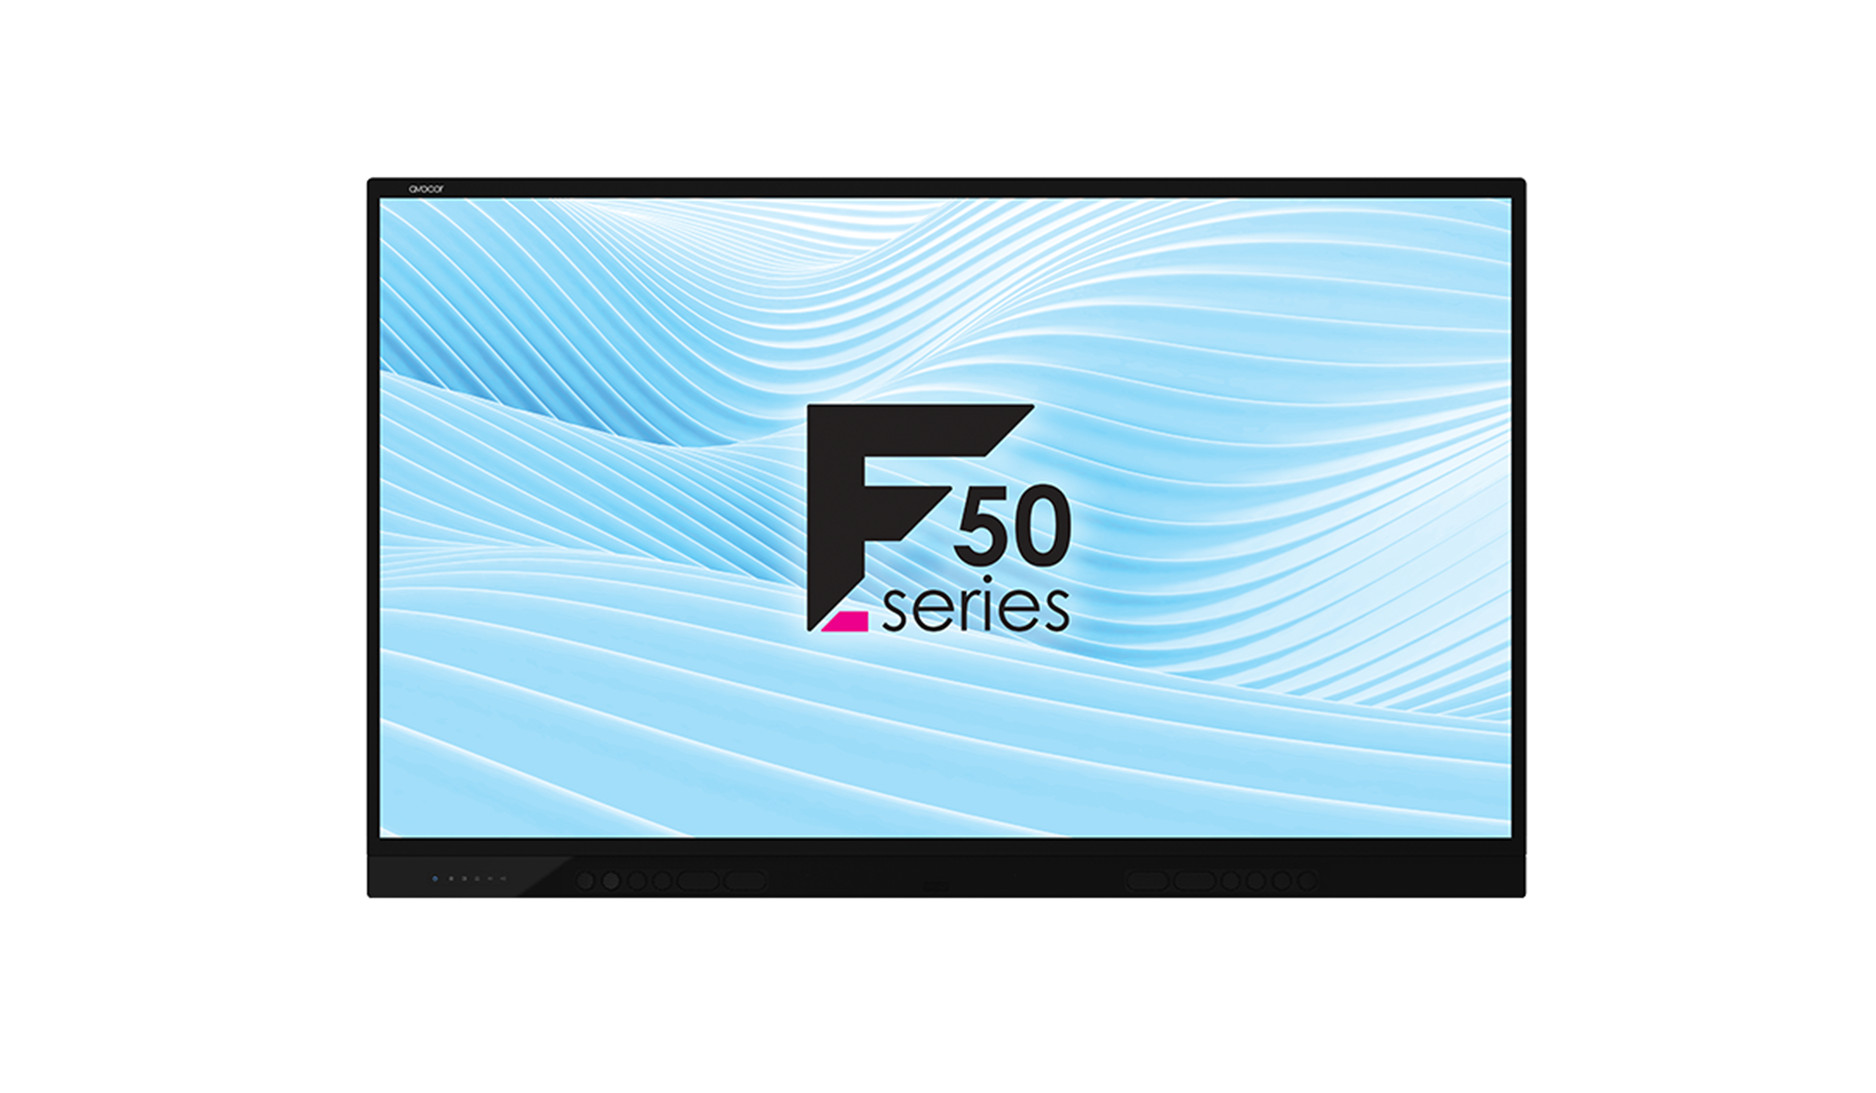 Avocor-F-Series-interaktives-75-Touch-Display